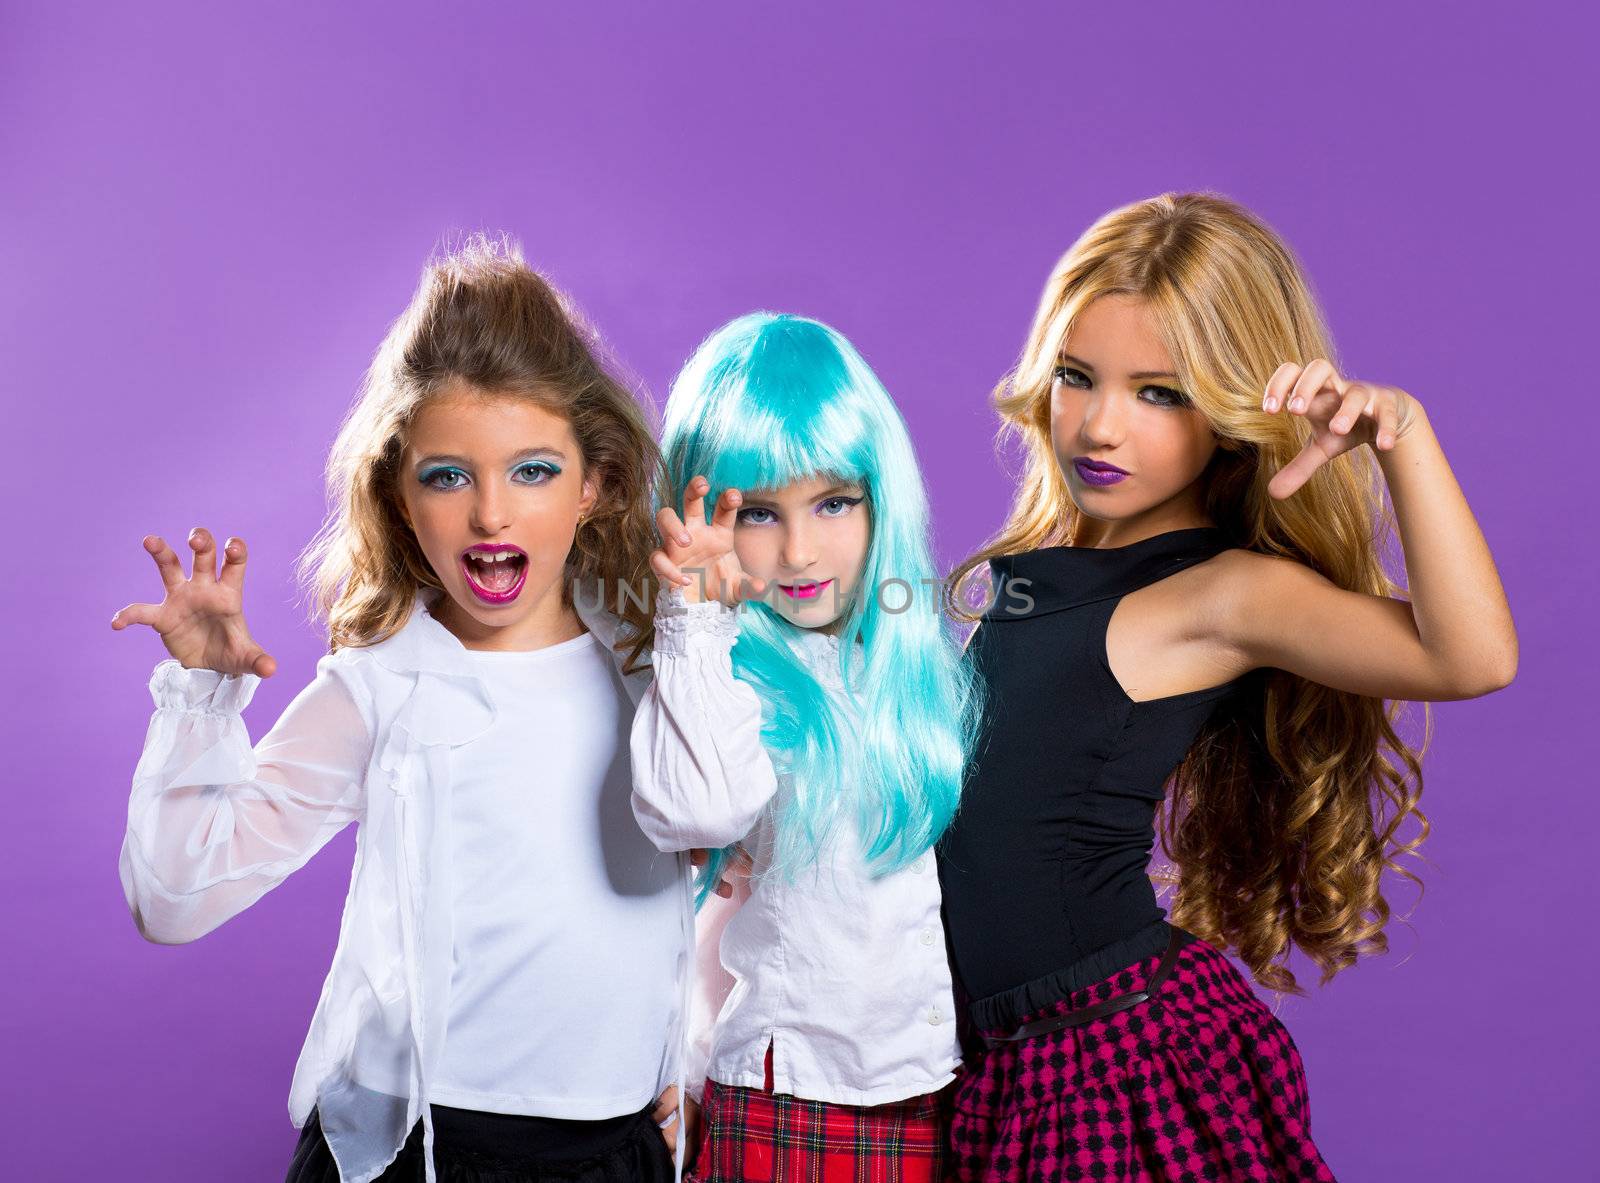 children group of fashiondoll friends scaring gesture girls on purple